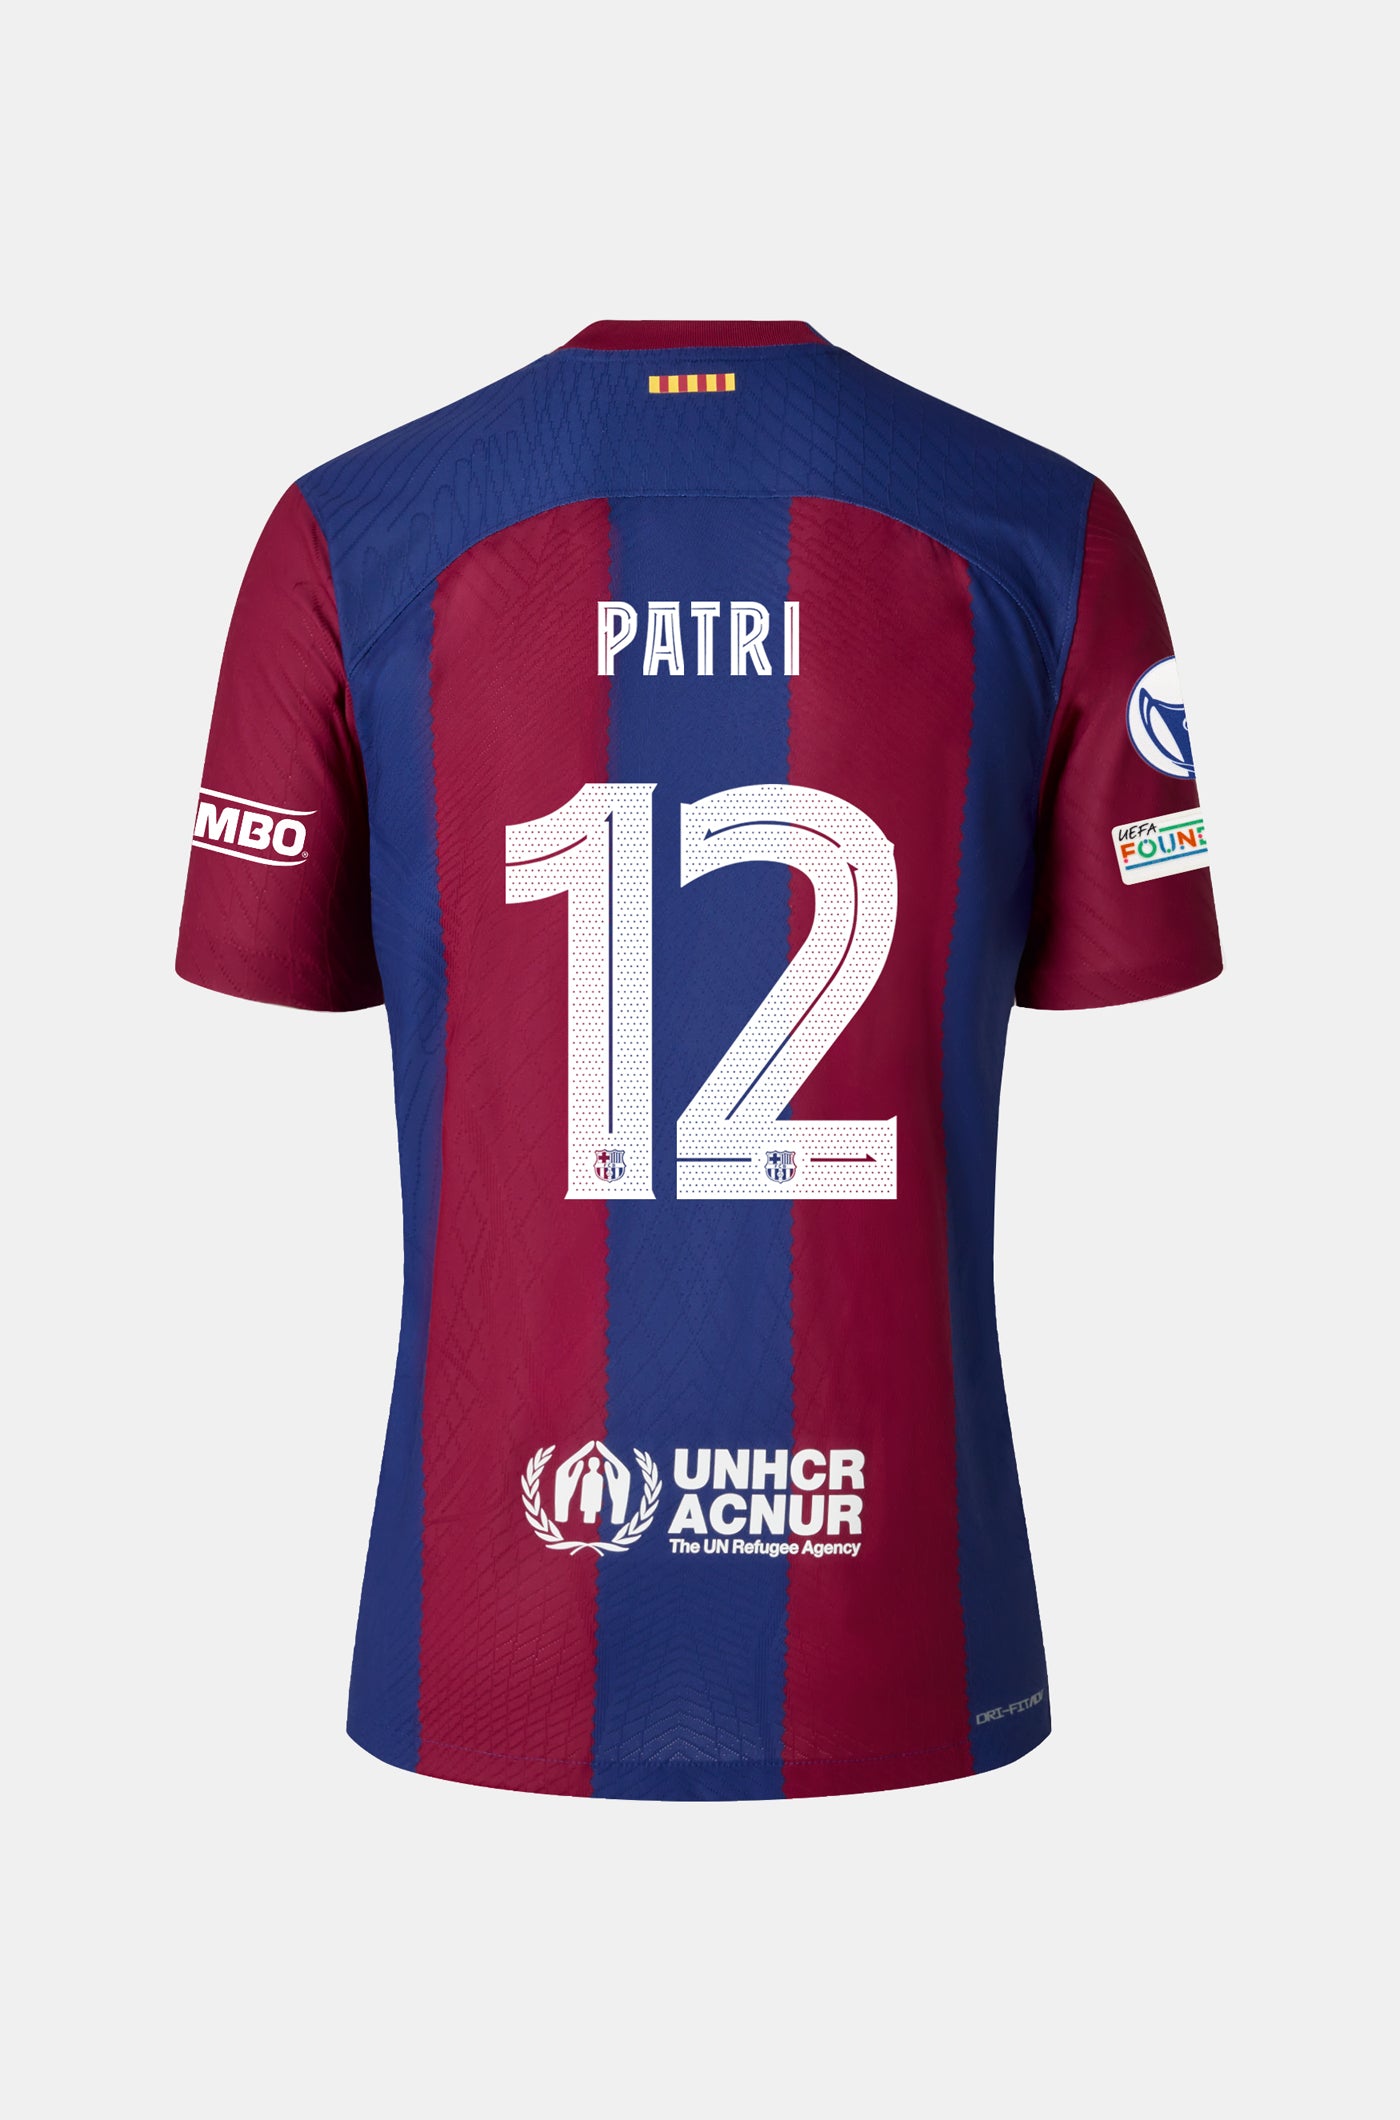 UWCL FC Barcelona Home Shirt 23/24 Player's Edition - Women - PATRI